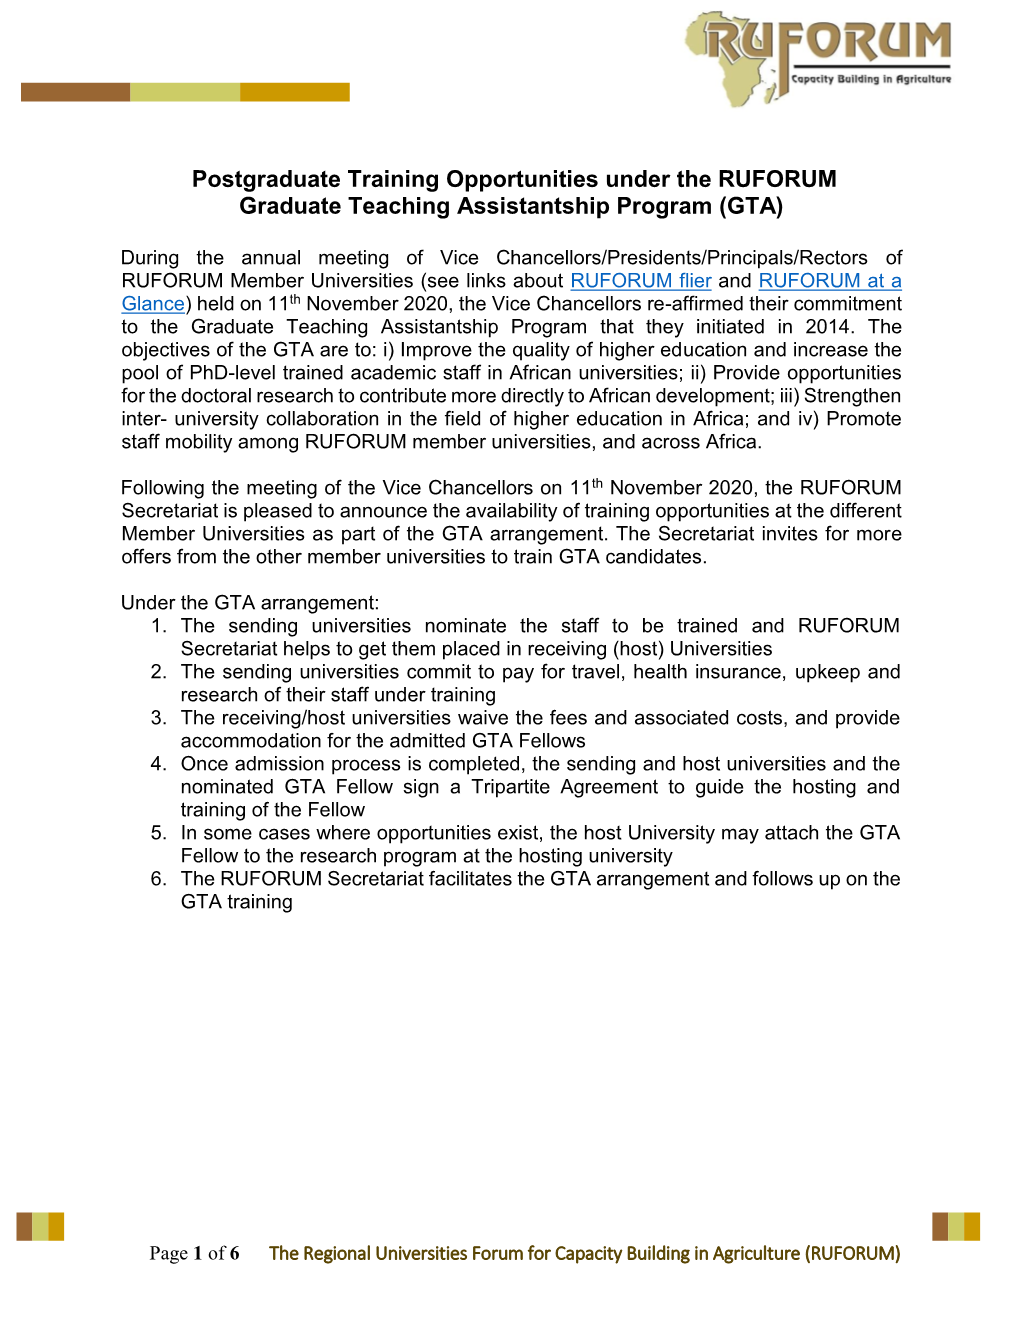 Postgraduate Training Opportunities Under the RUFORUM Graduate Teaching Assistantship Program (GTA)